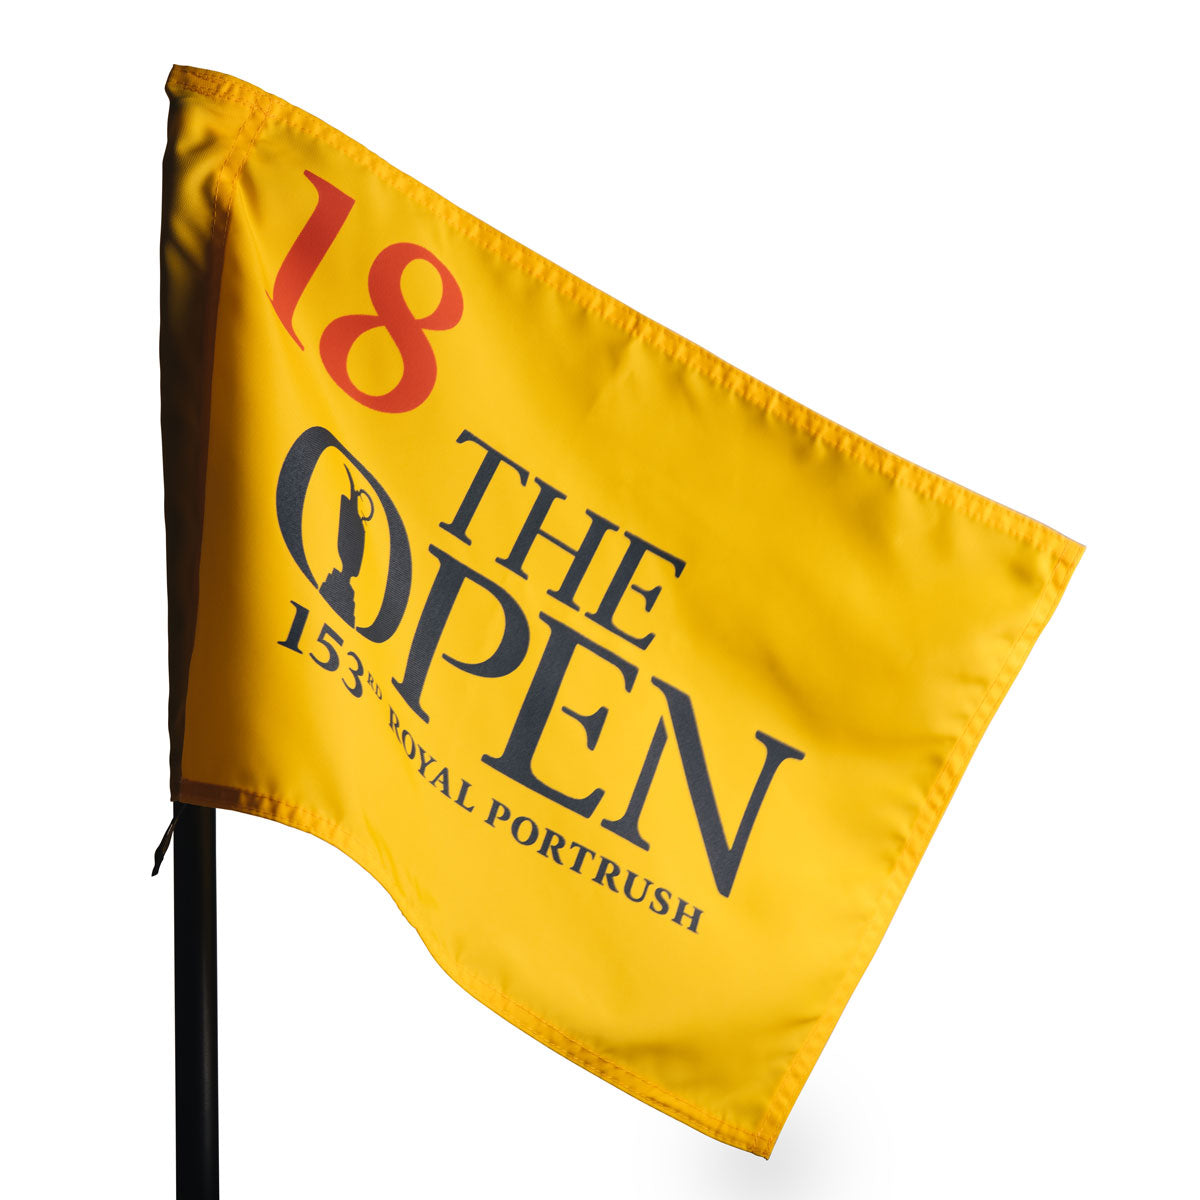 Royal Portrush Yellow 153rd Open Pin Flag